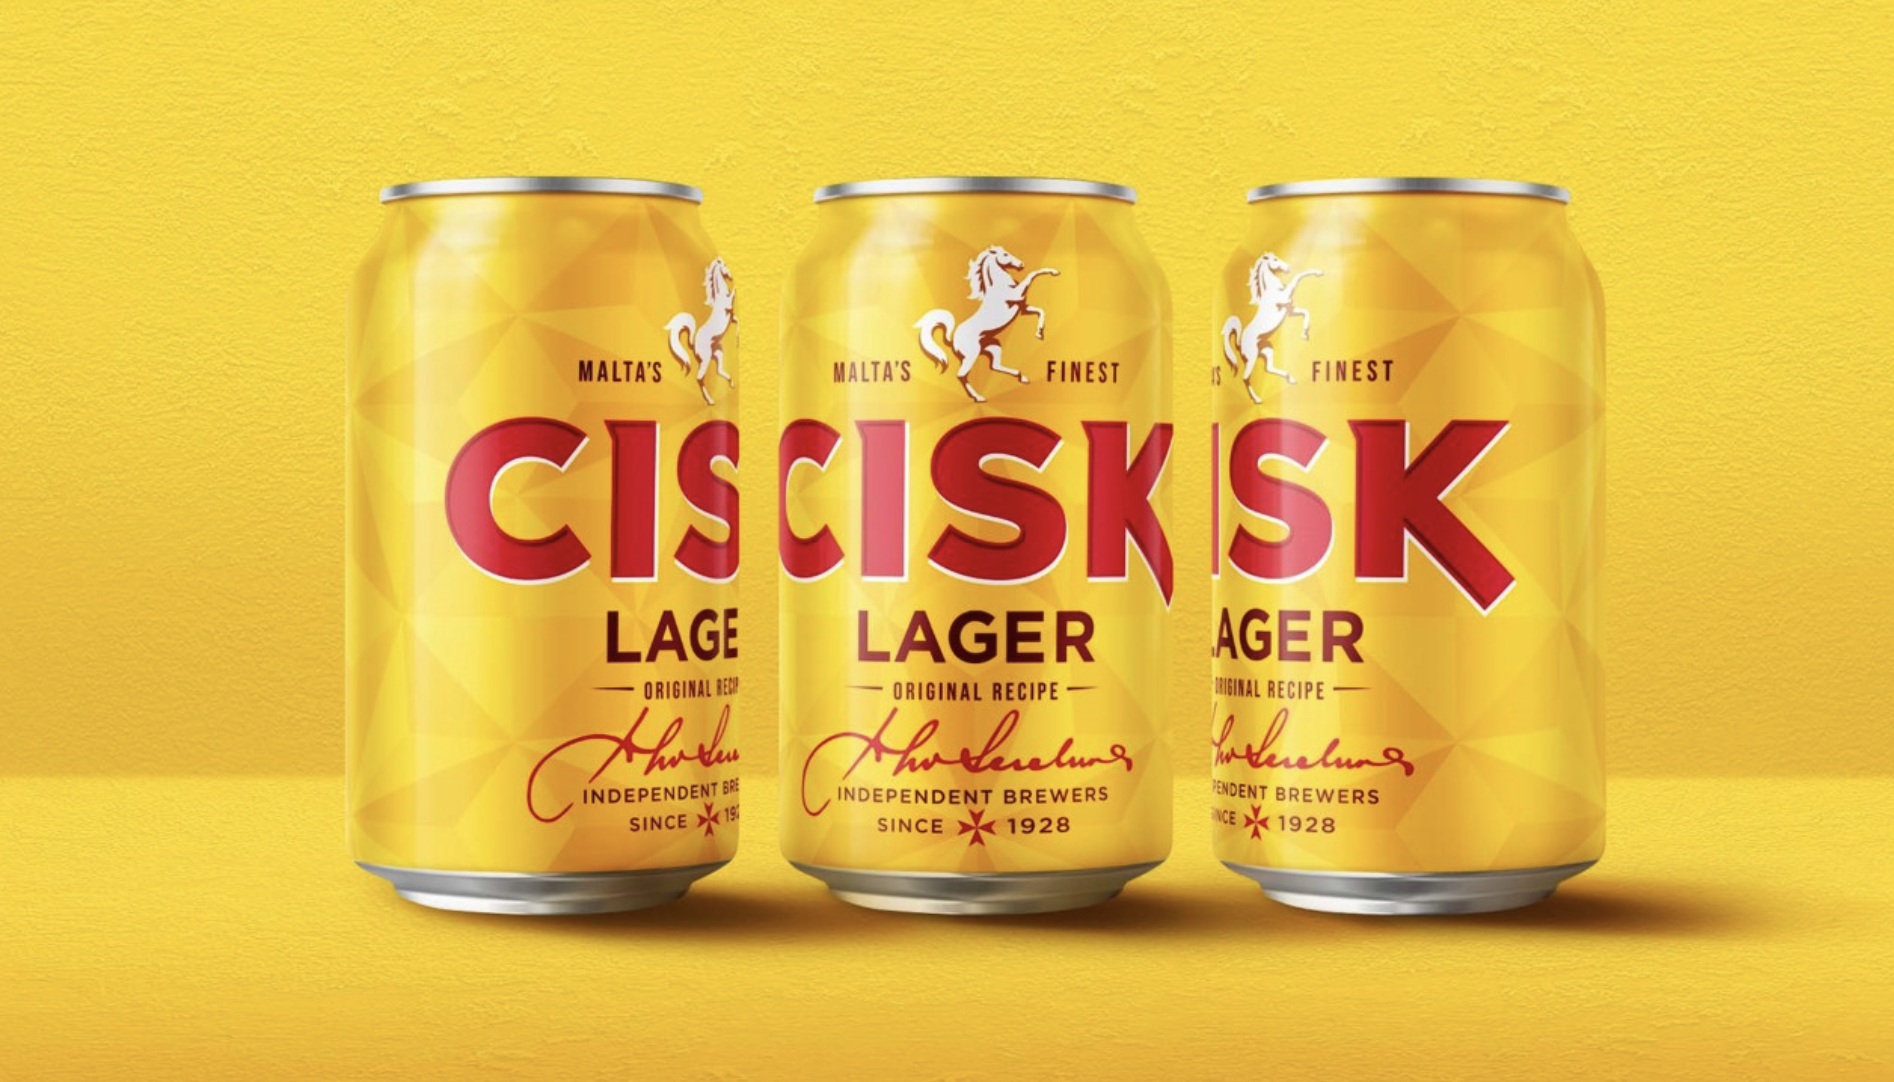 Cisk啤酒品牌&包装设计创意欣赏